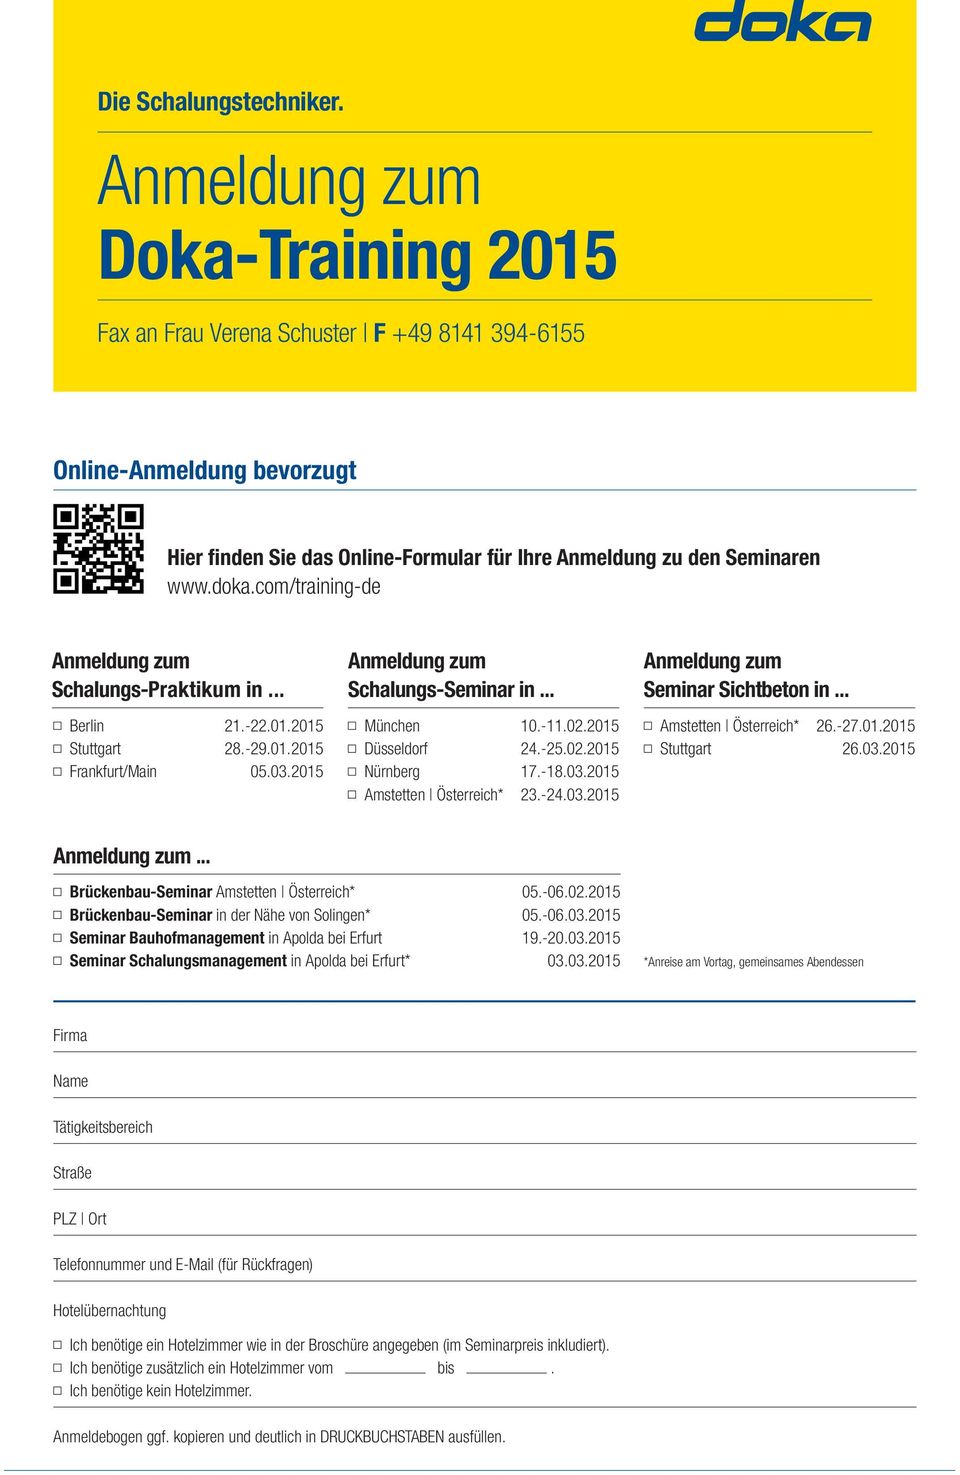 com/training-de Anmeldung zum Schalungs-Praktikum in... Berlin Stuttgart Frankfurt/Main 21.-22.01.2015 28.-29.01.2015 05.03.2015 Anmeldung zum Schalungs-Seminar in.